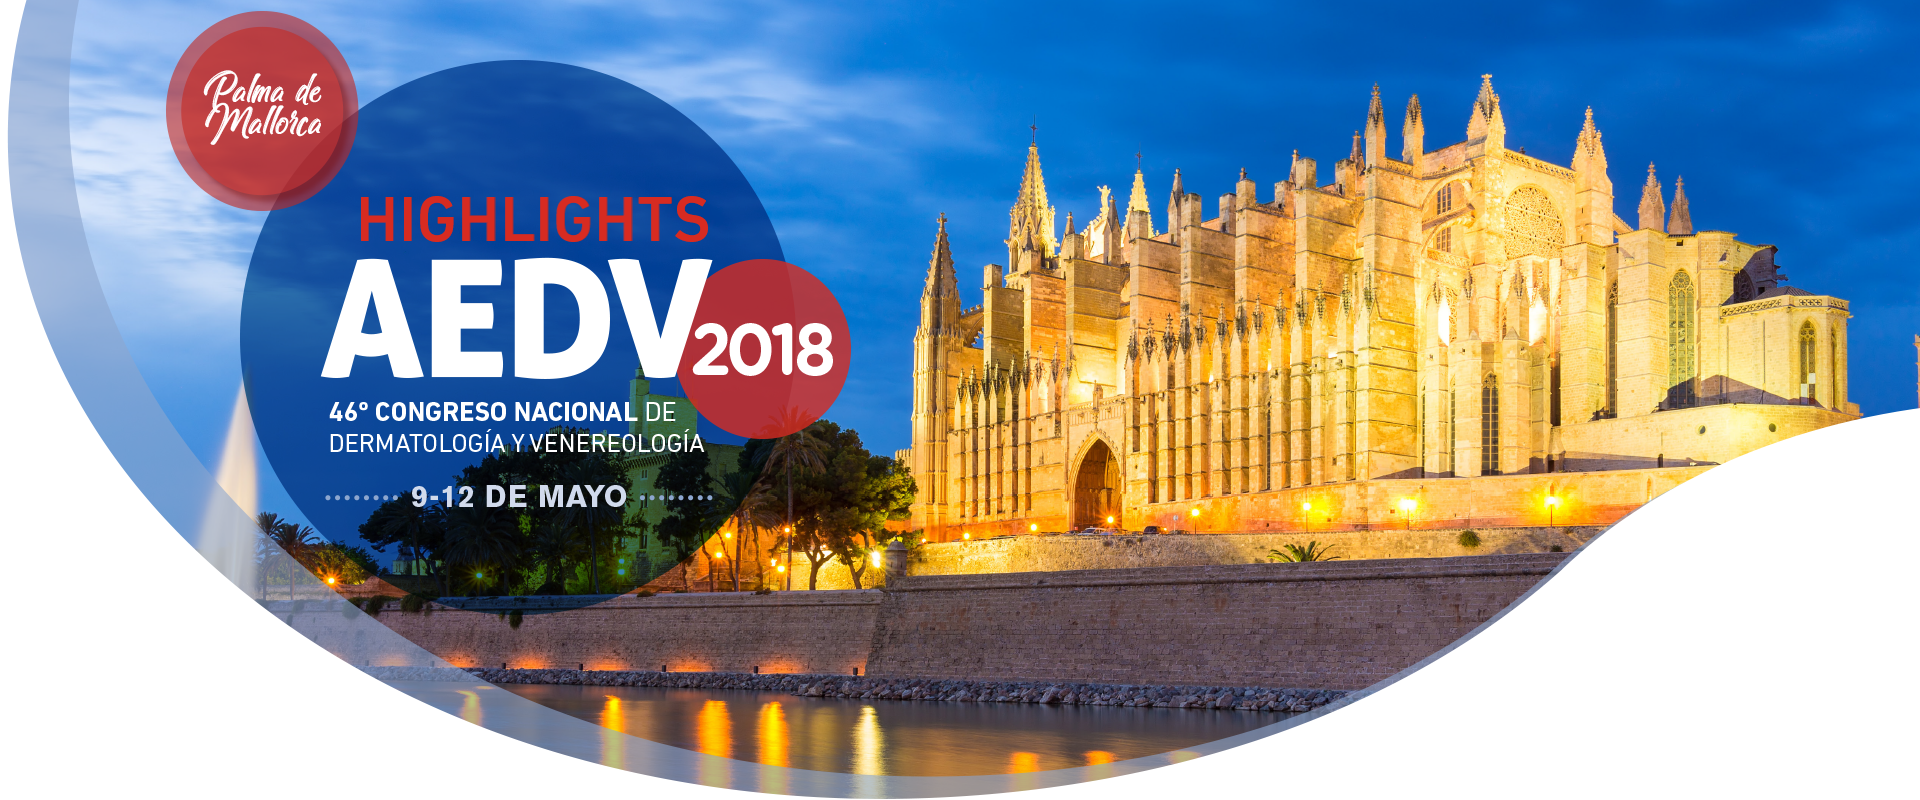 AEDV Highlights AEDV 2018